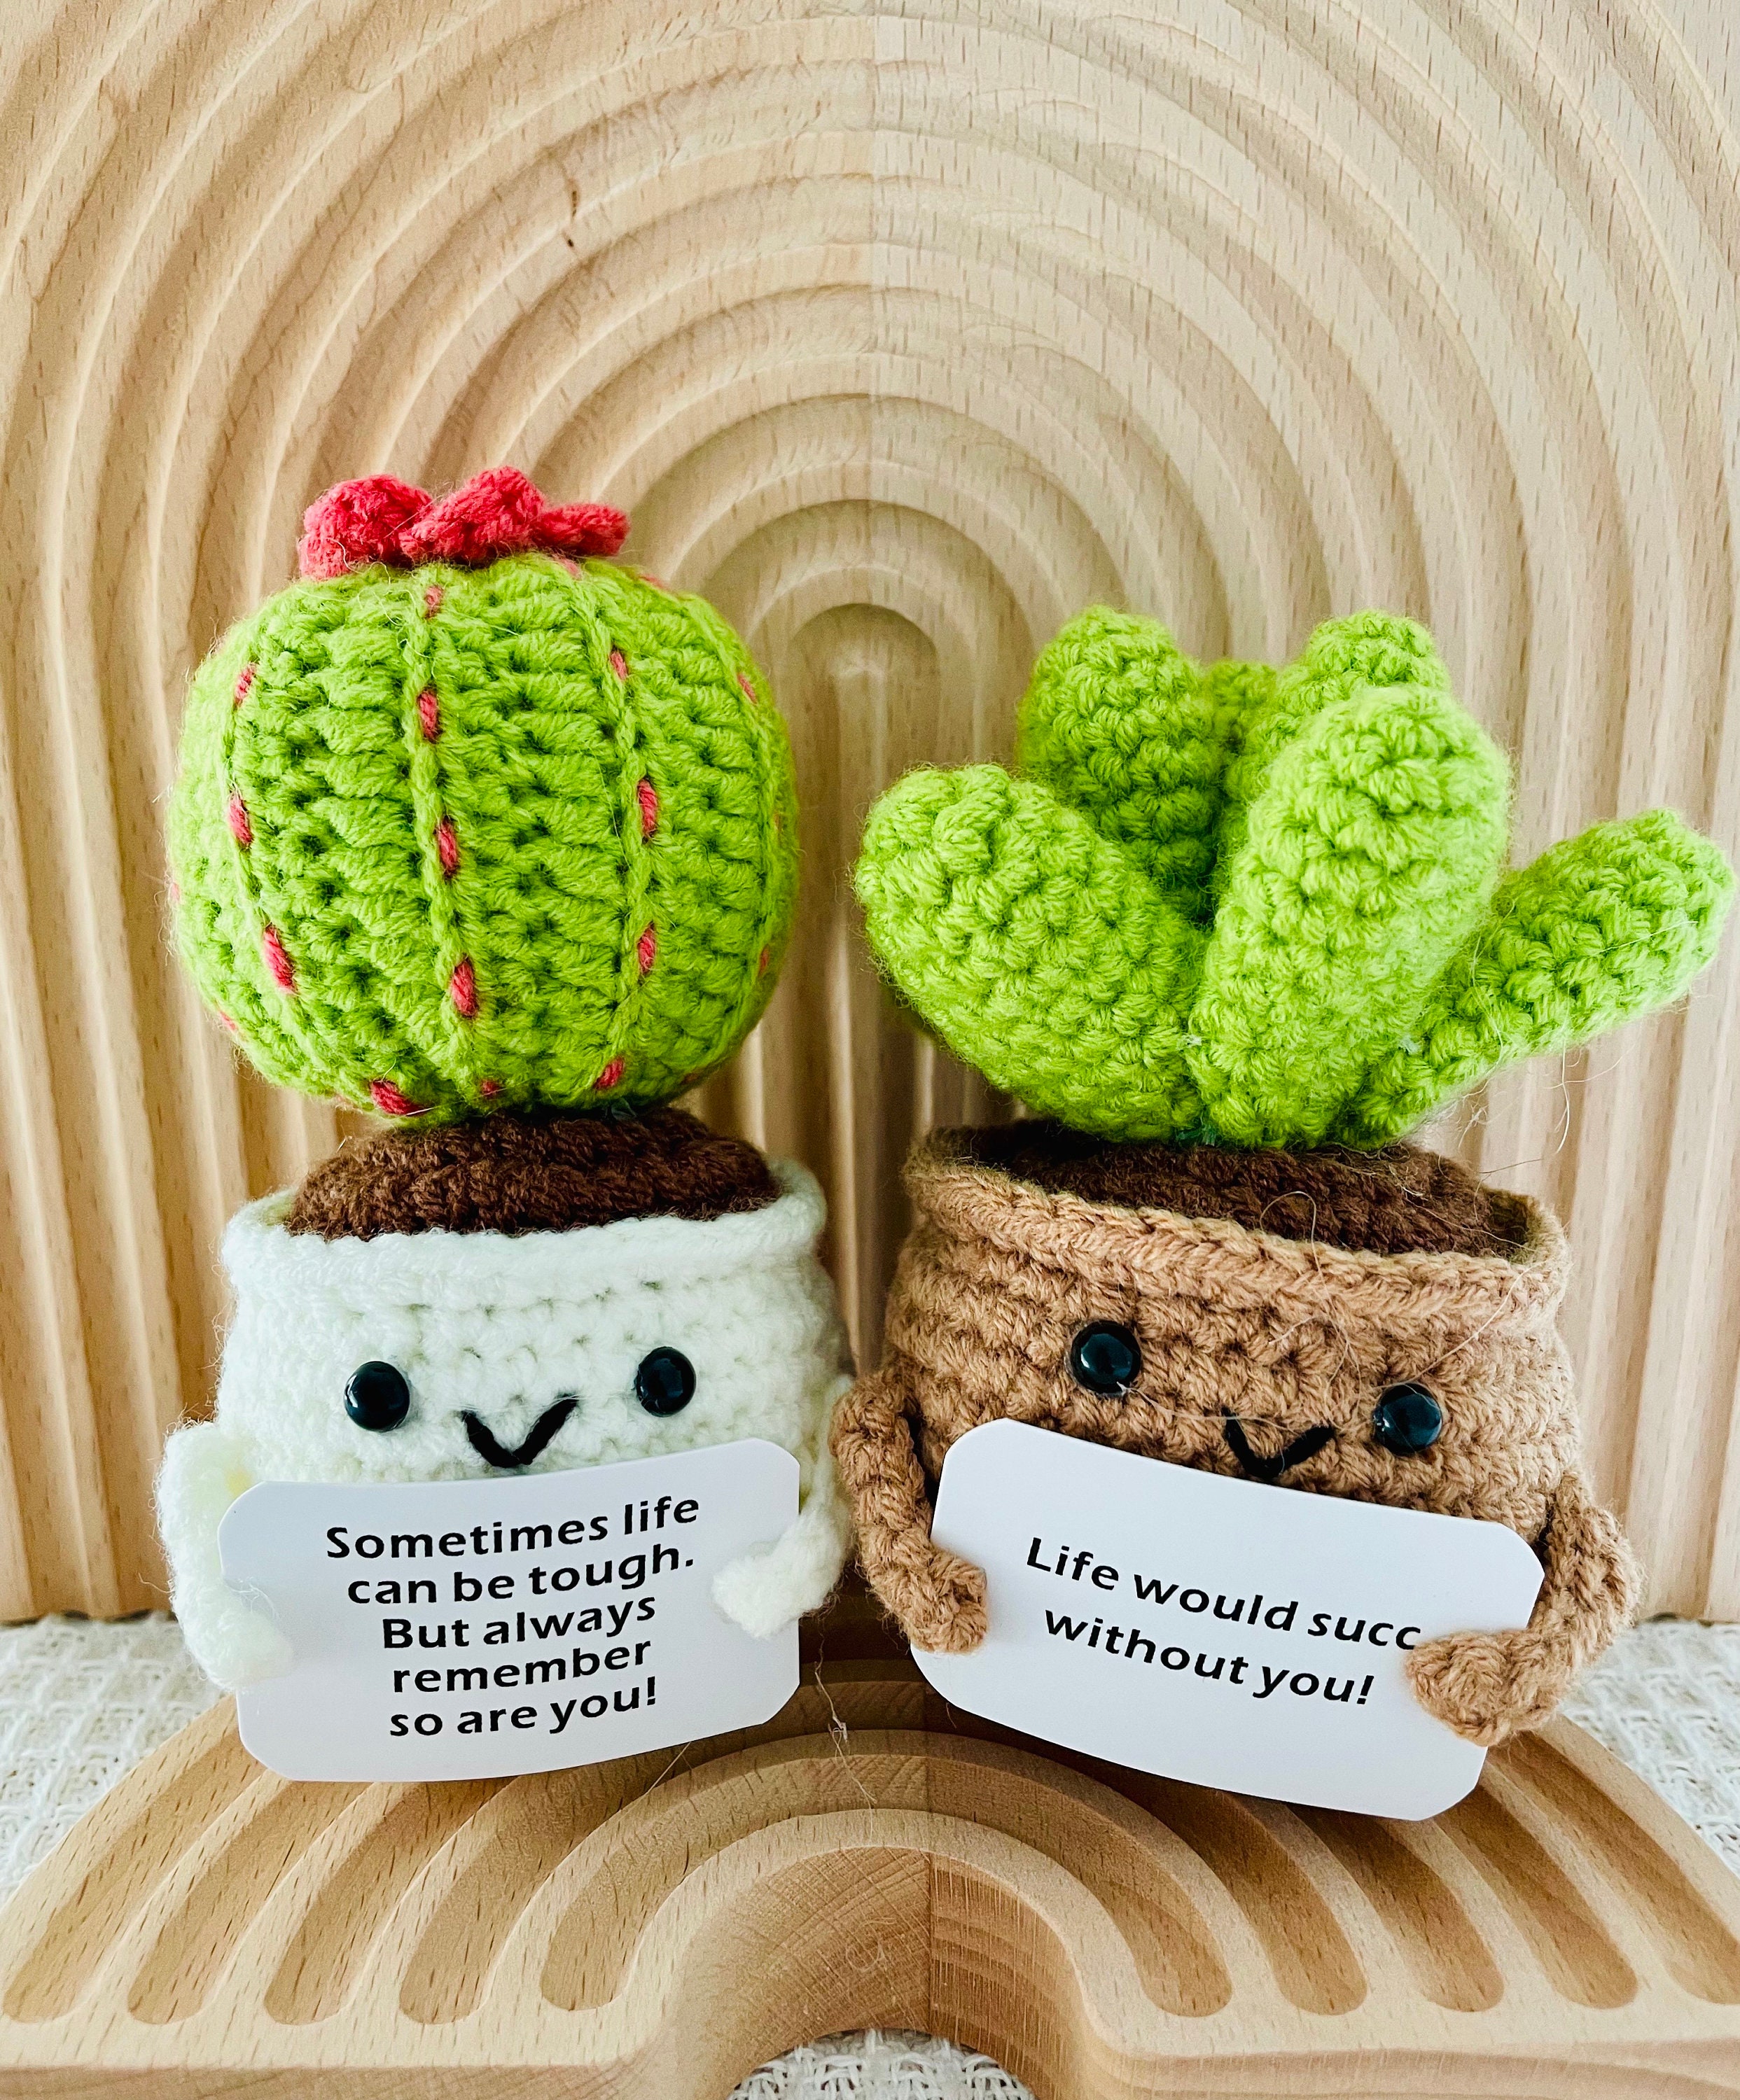 Happy Cactus Bundle Crochet kit - Amigurumi for beginners easy